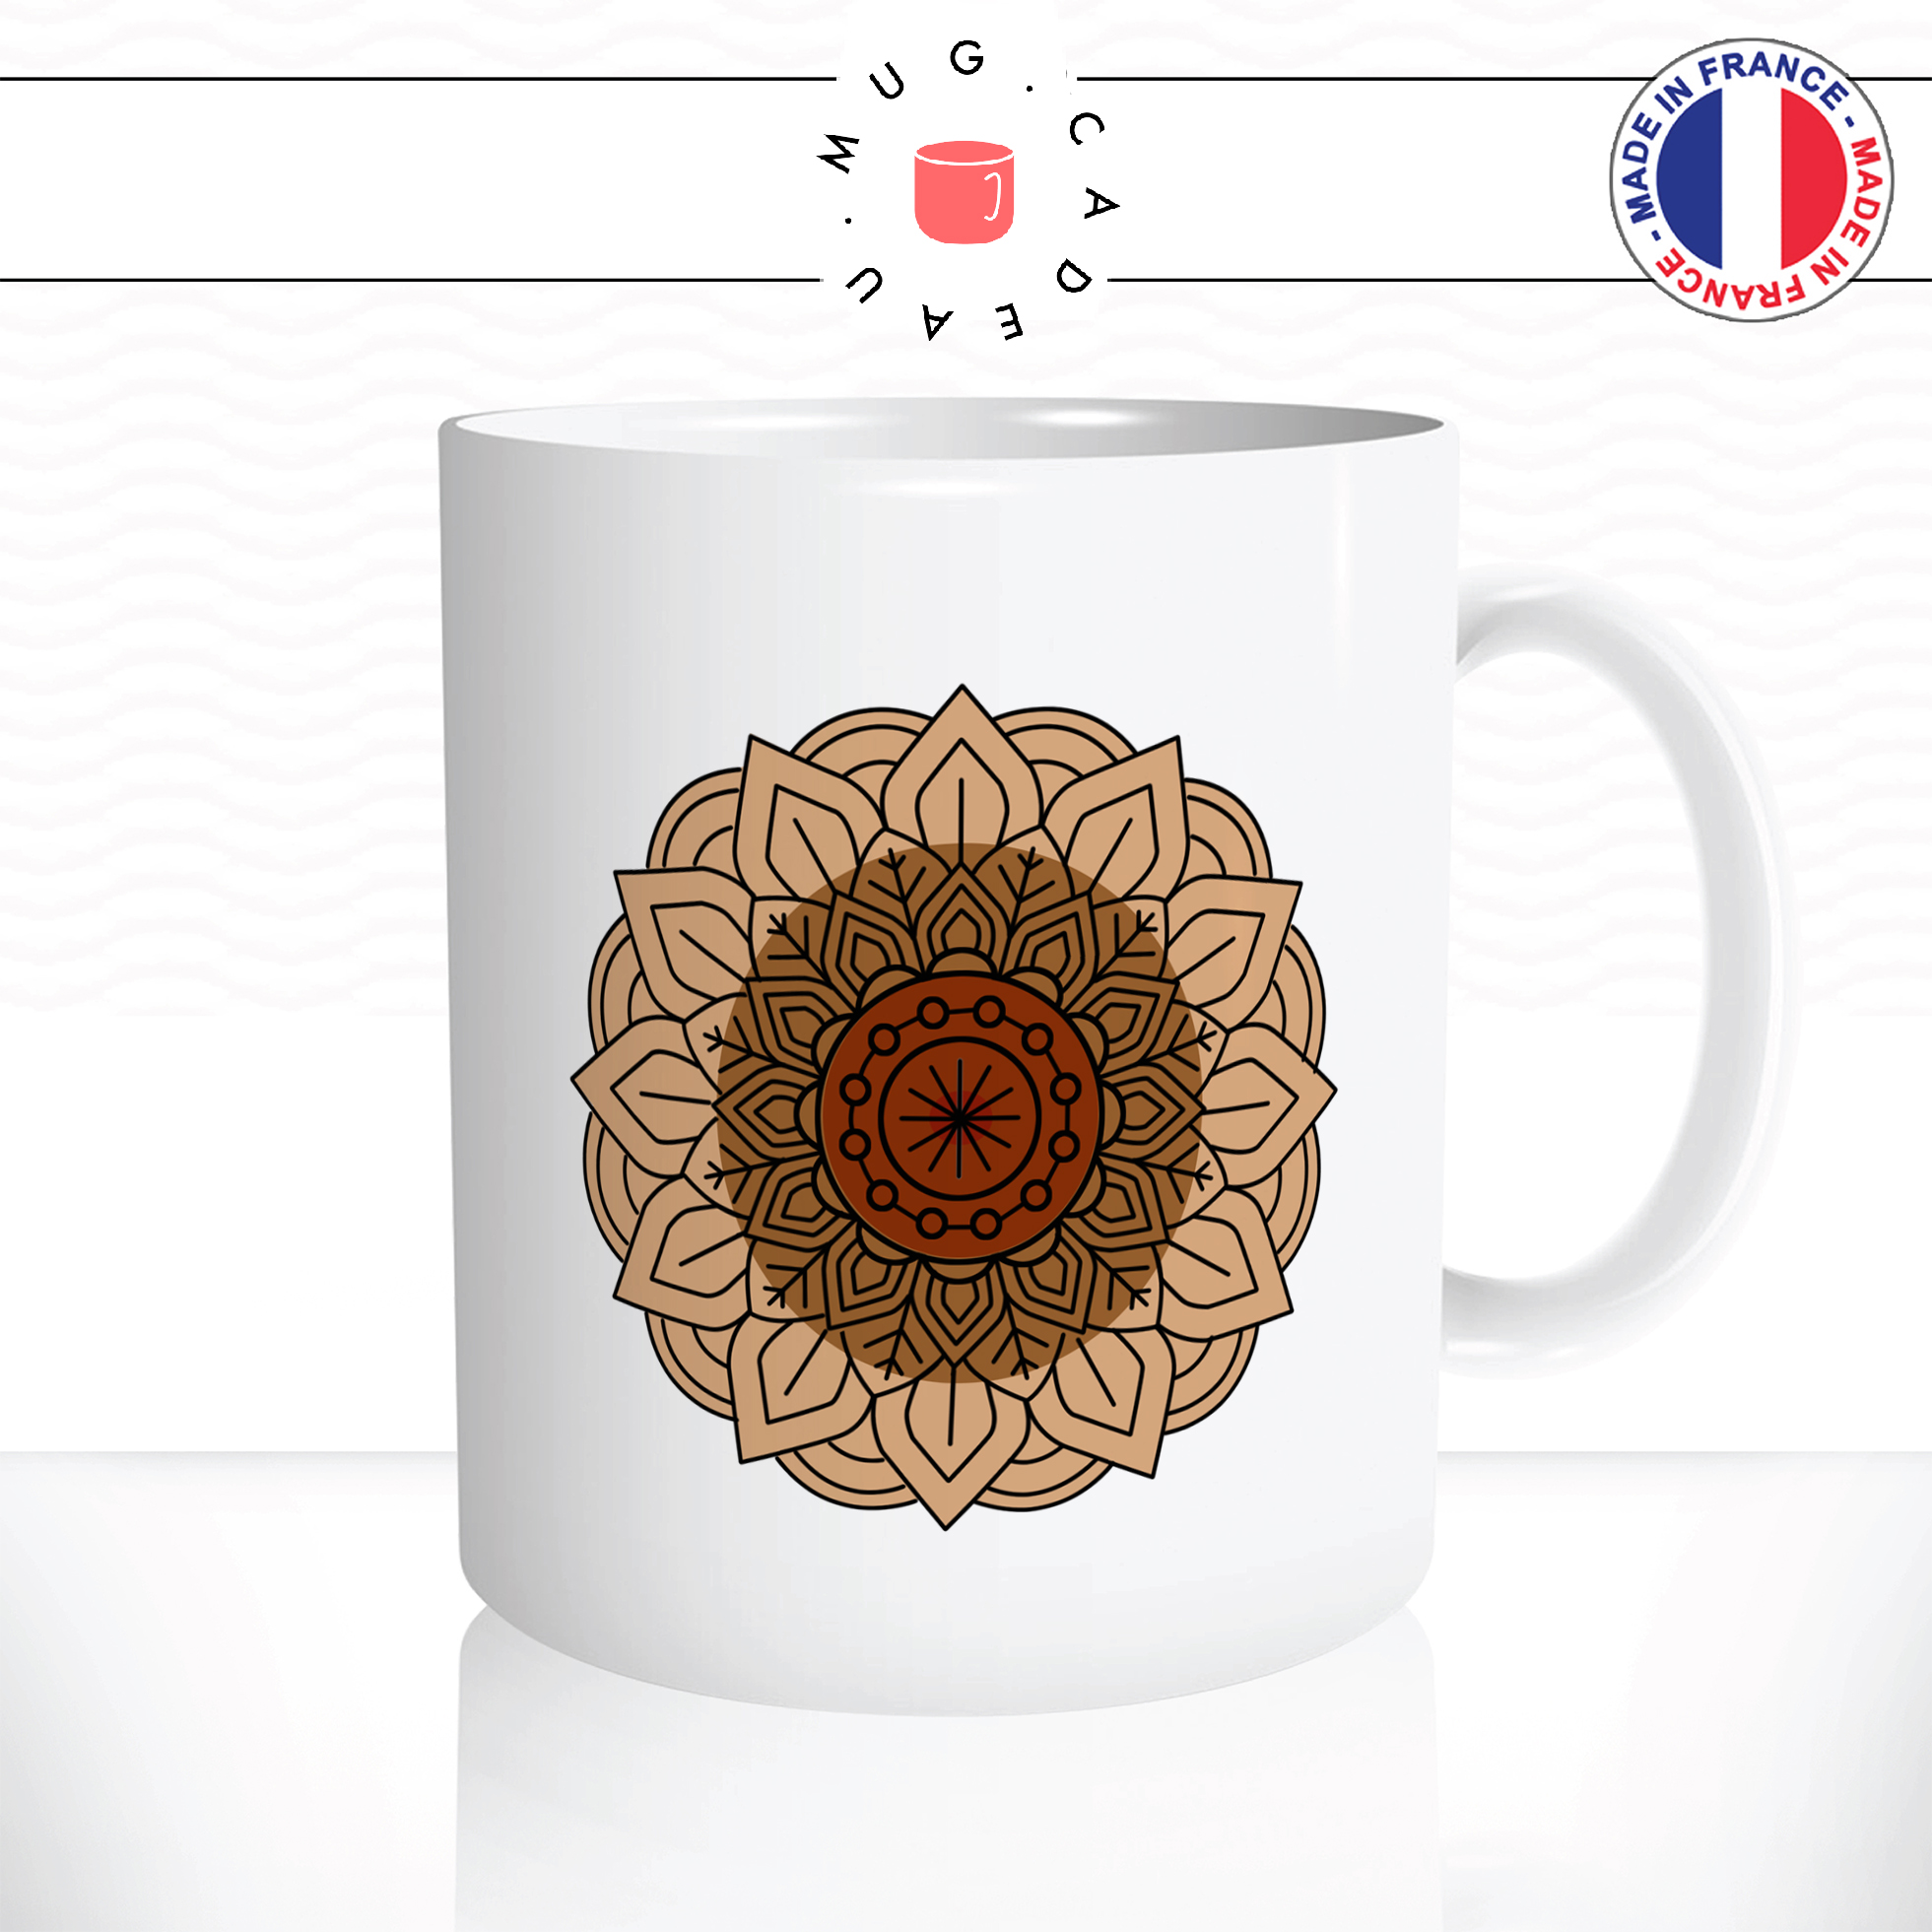 mug-tasse-ref15-fleurs-mandala-couleurs-beige-marron-rond-simple-cafe-the-mugs-tasses-personnalise-anse-droite